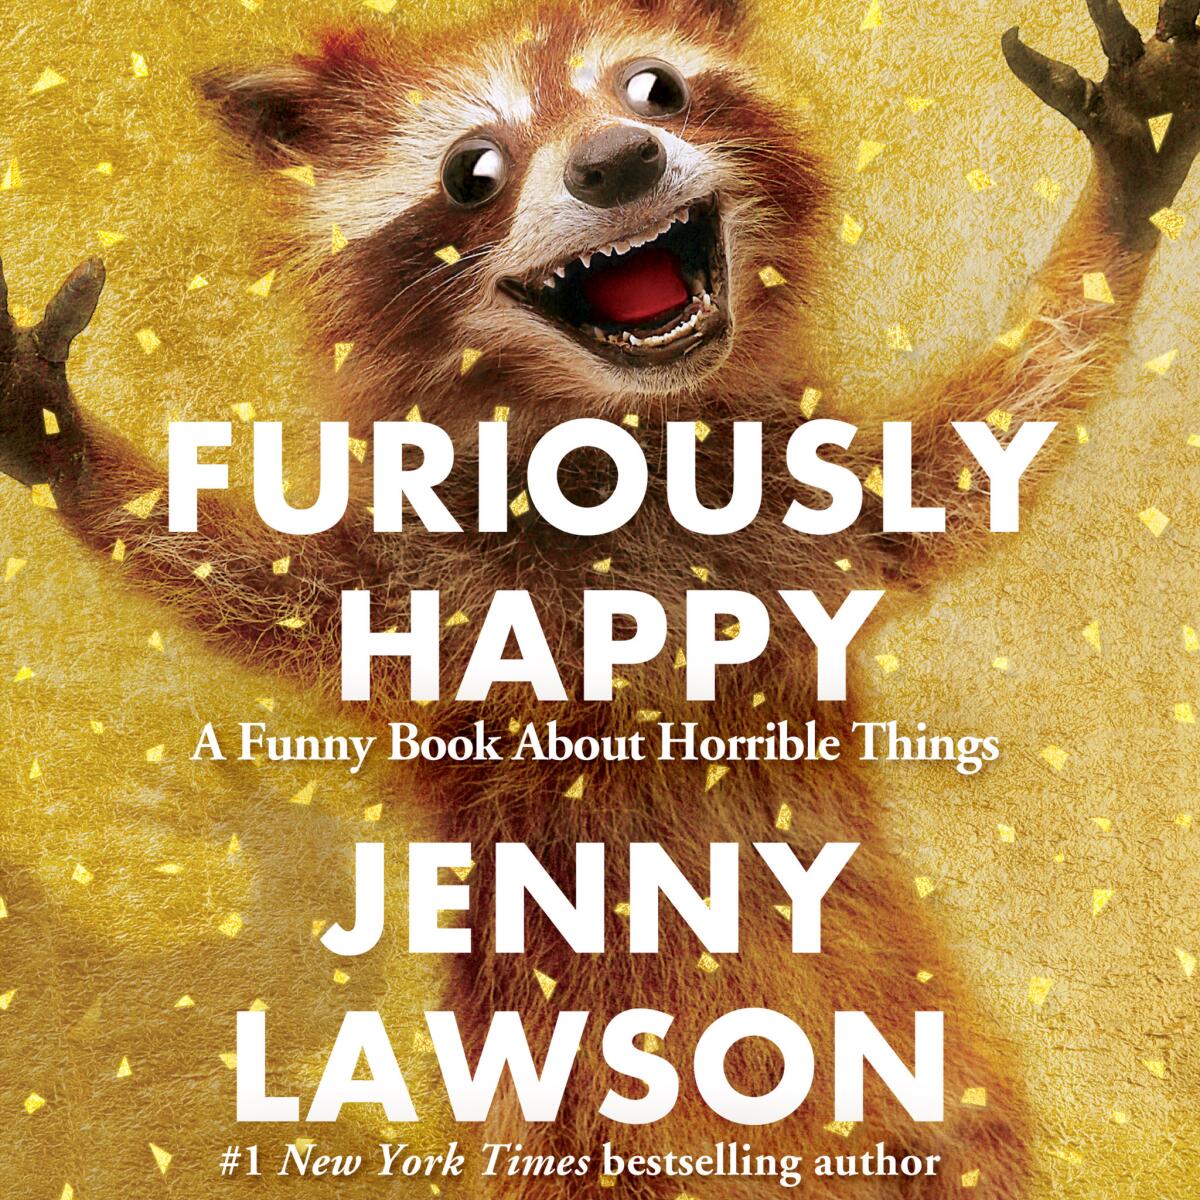 "Furiously Happy" by Jenny Lawson